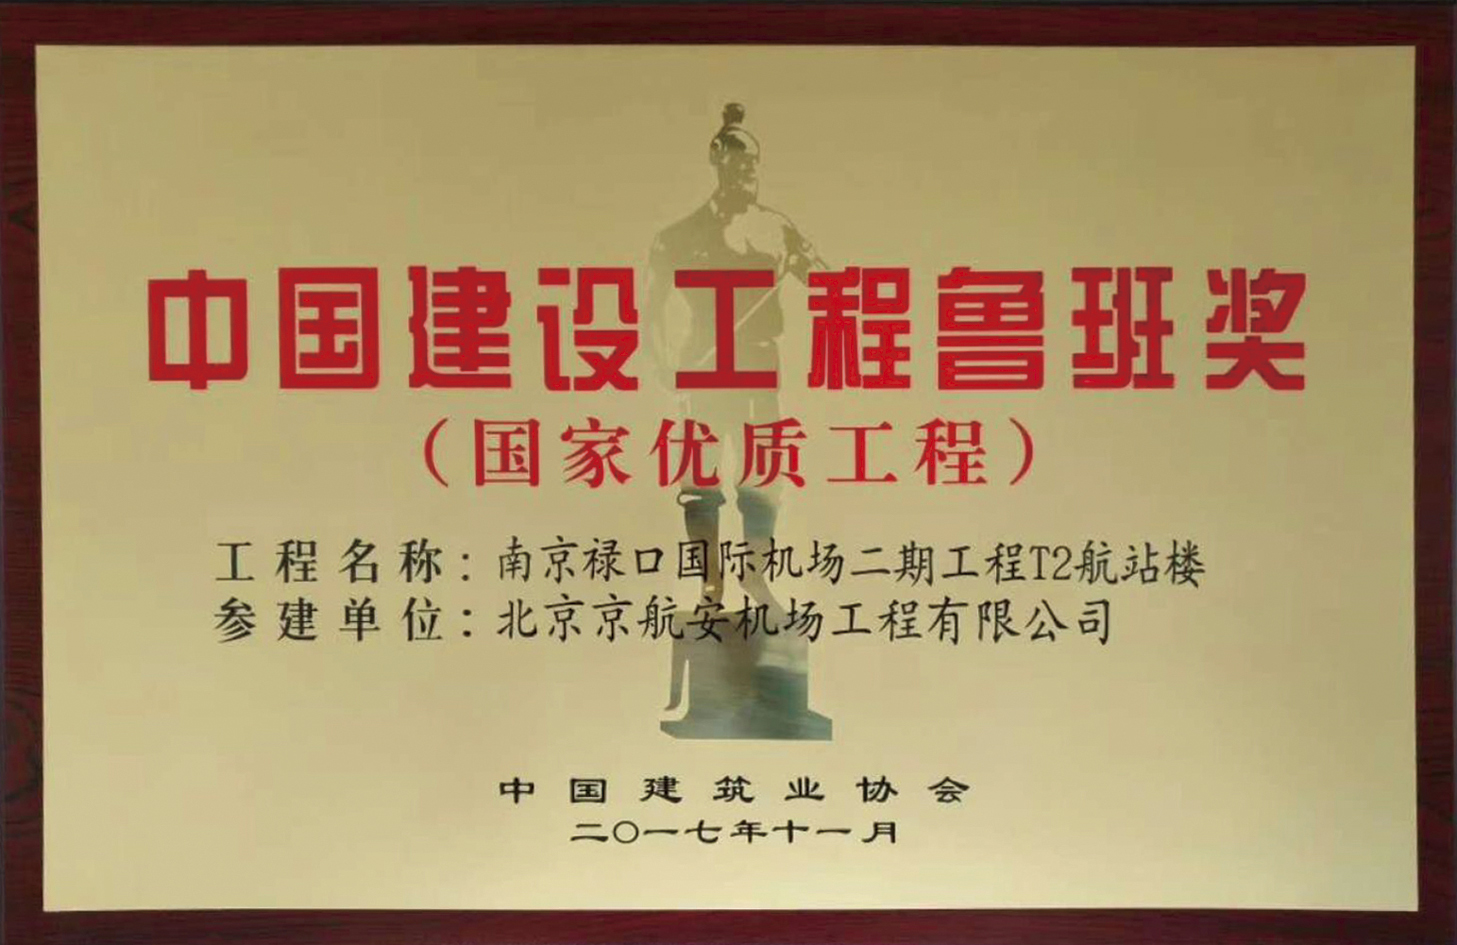 China Construction Project Luban Award